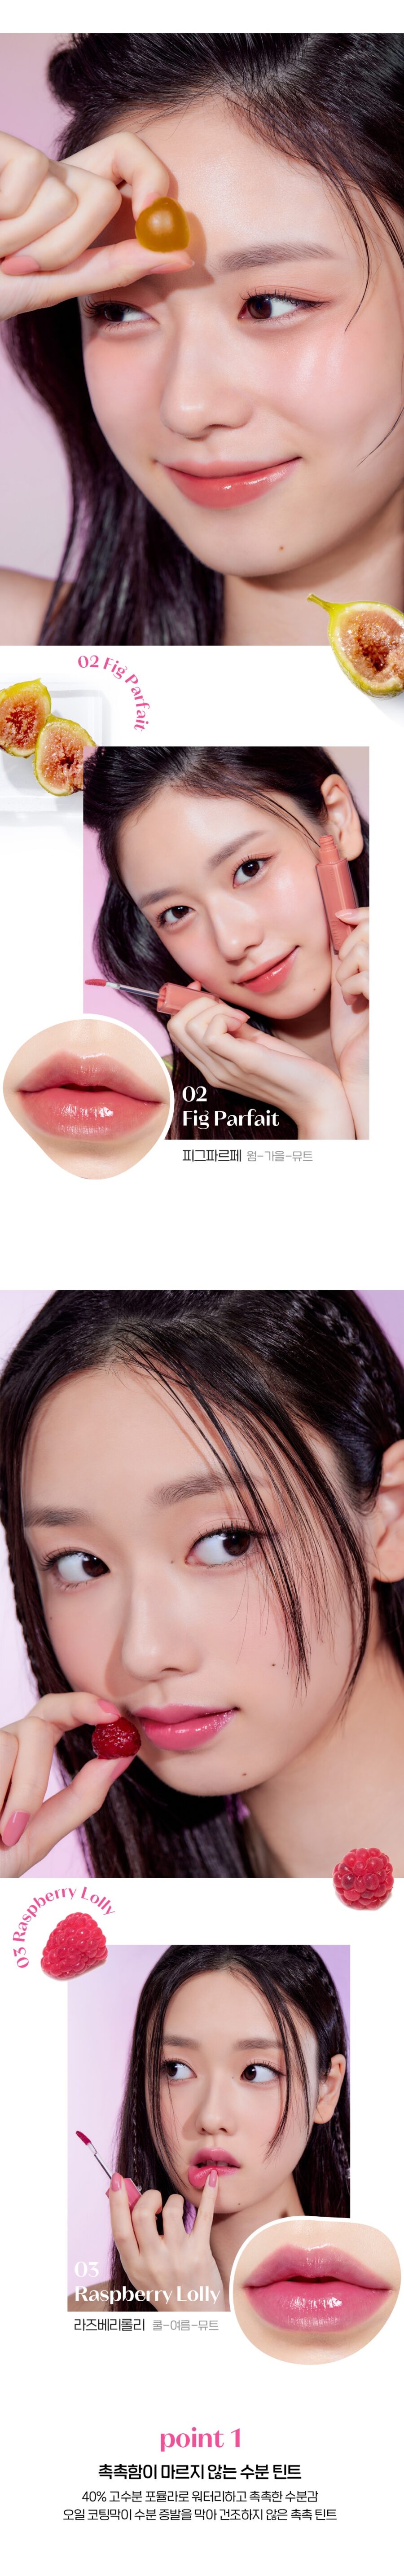 Etude House Fruity Dewy Tint korean skincare product online shop malaysia china india3